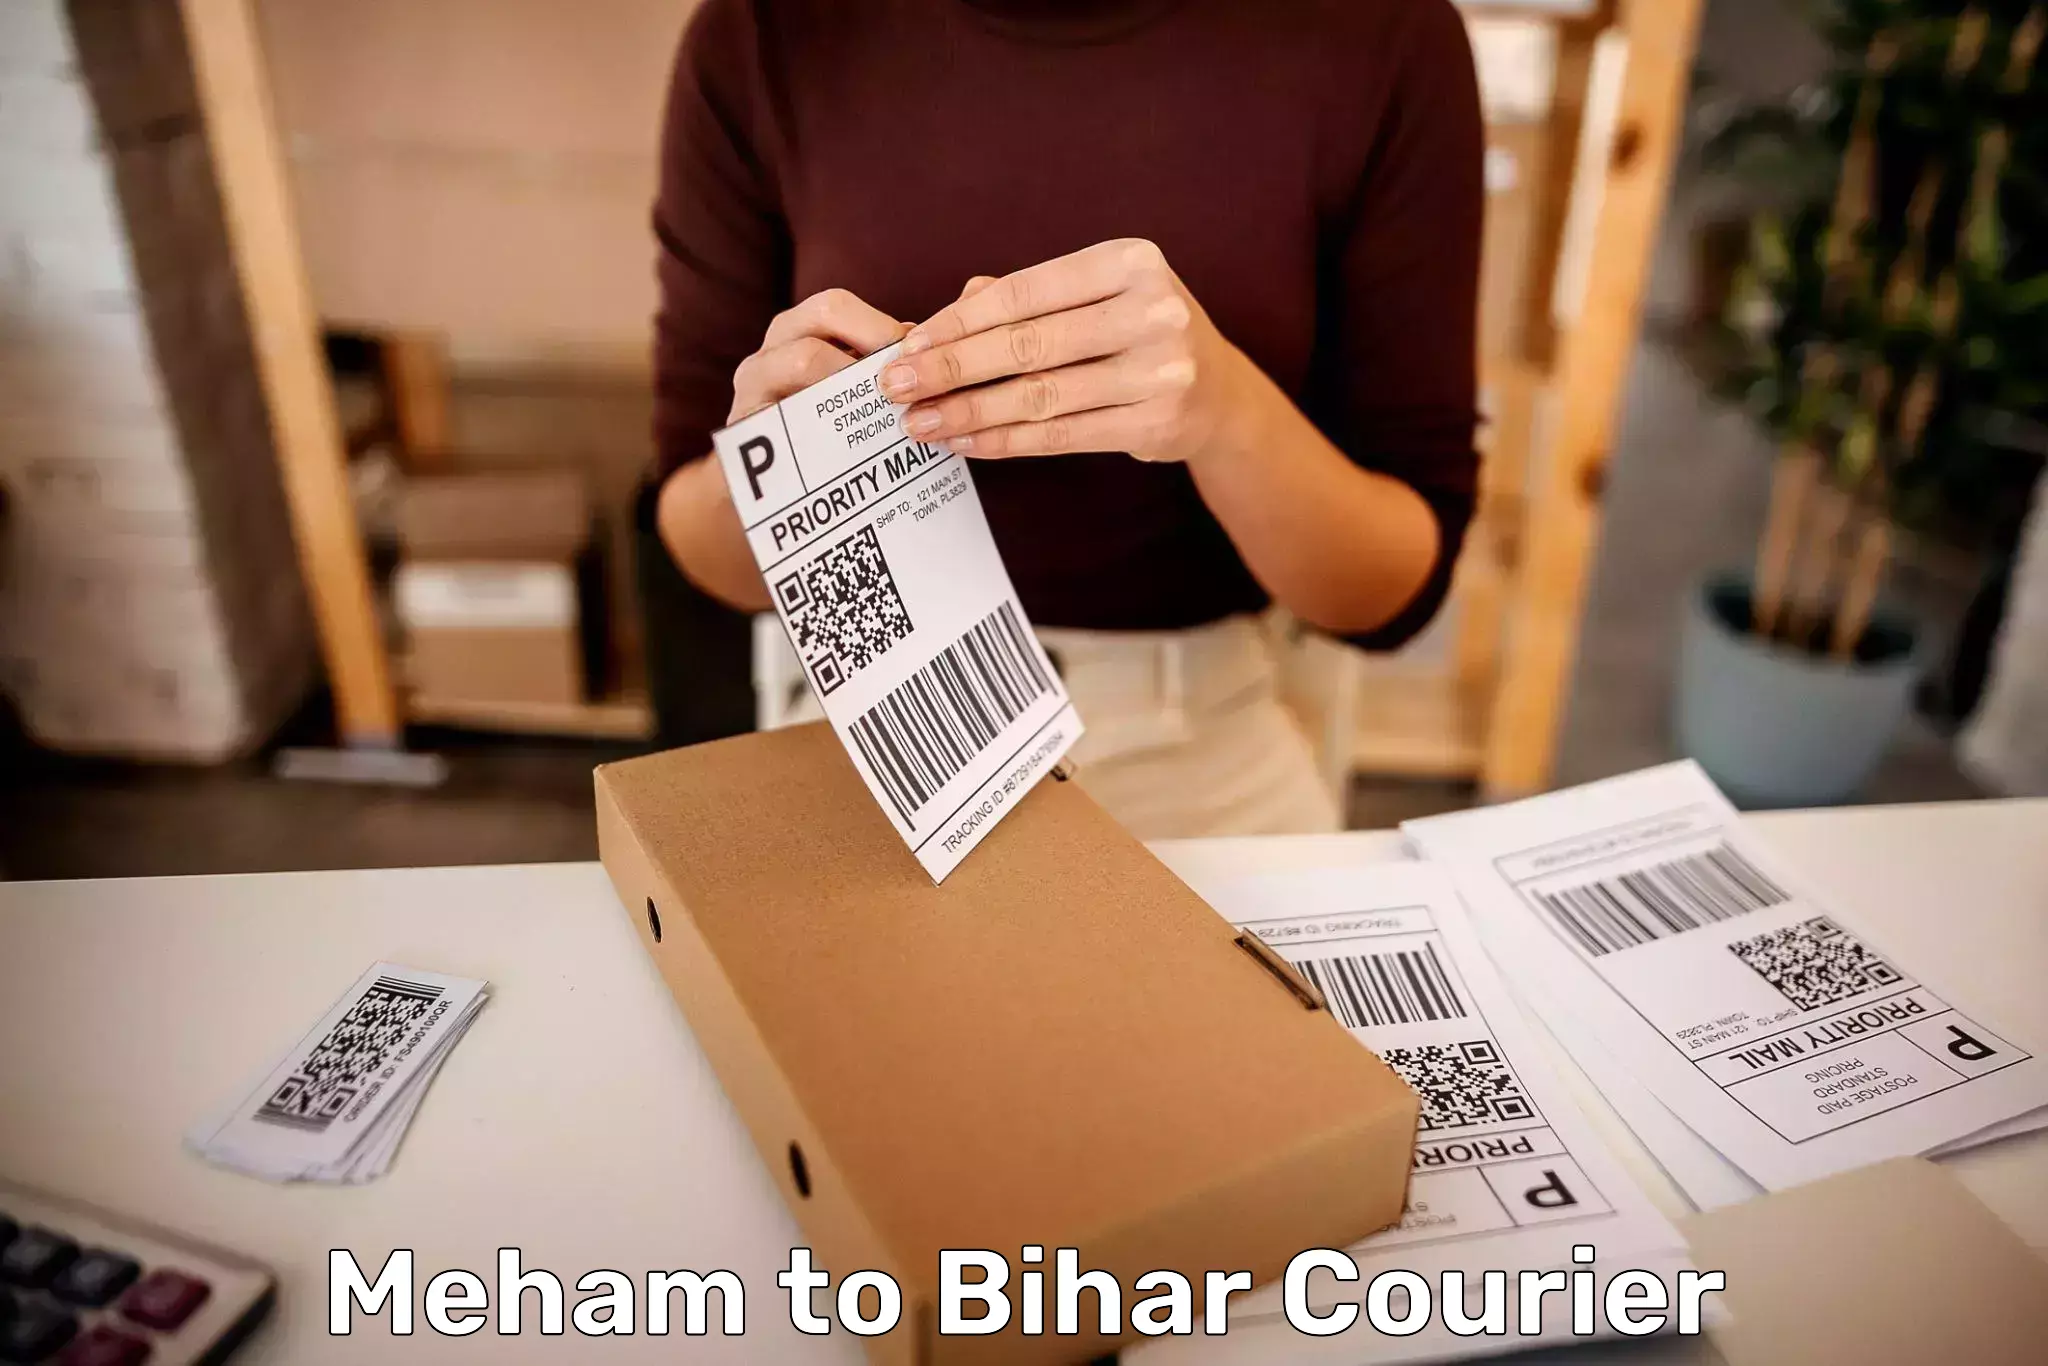 Express luggage delivery Meham to Aurangabad Bihar